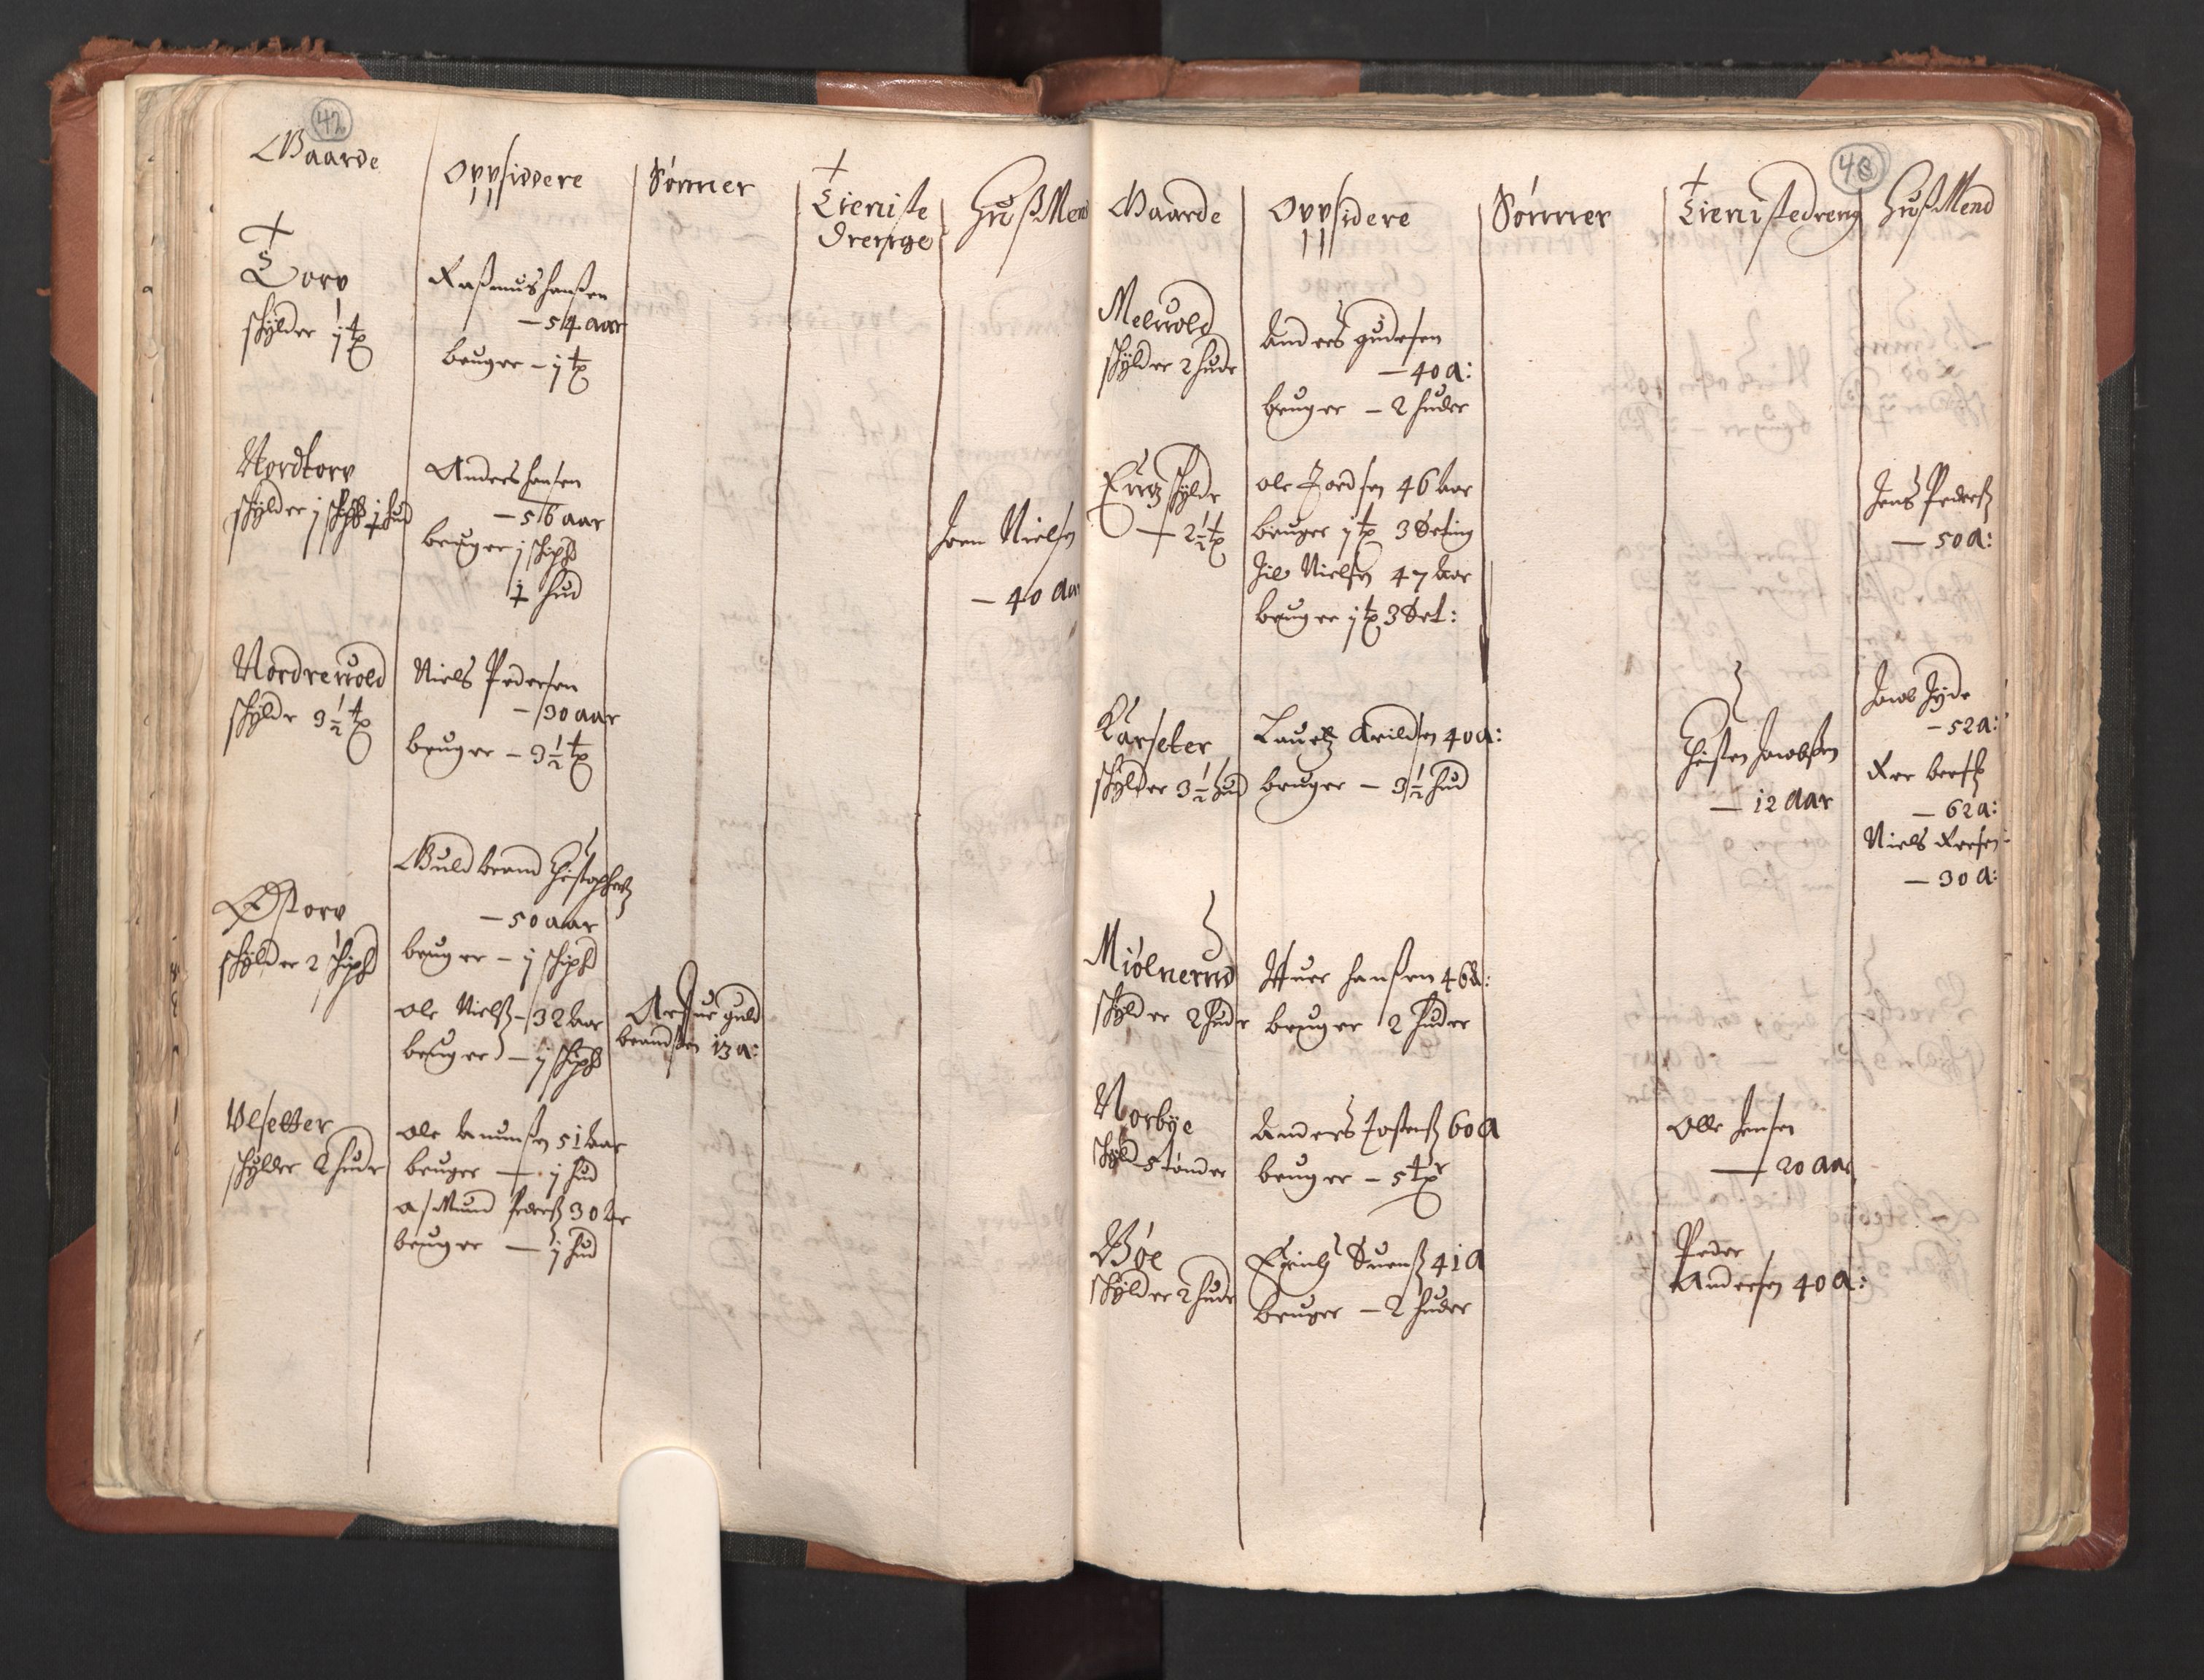 RA, Fogdenes og sorenskrivernes manntall 1664-1666, nr. 1: Fogderier (len og skipreider) i nåværende Østfold fylke, 1664, s. 42-43